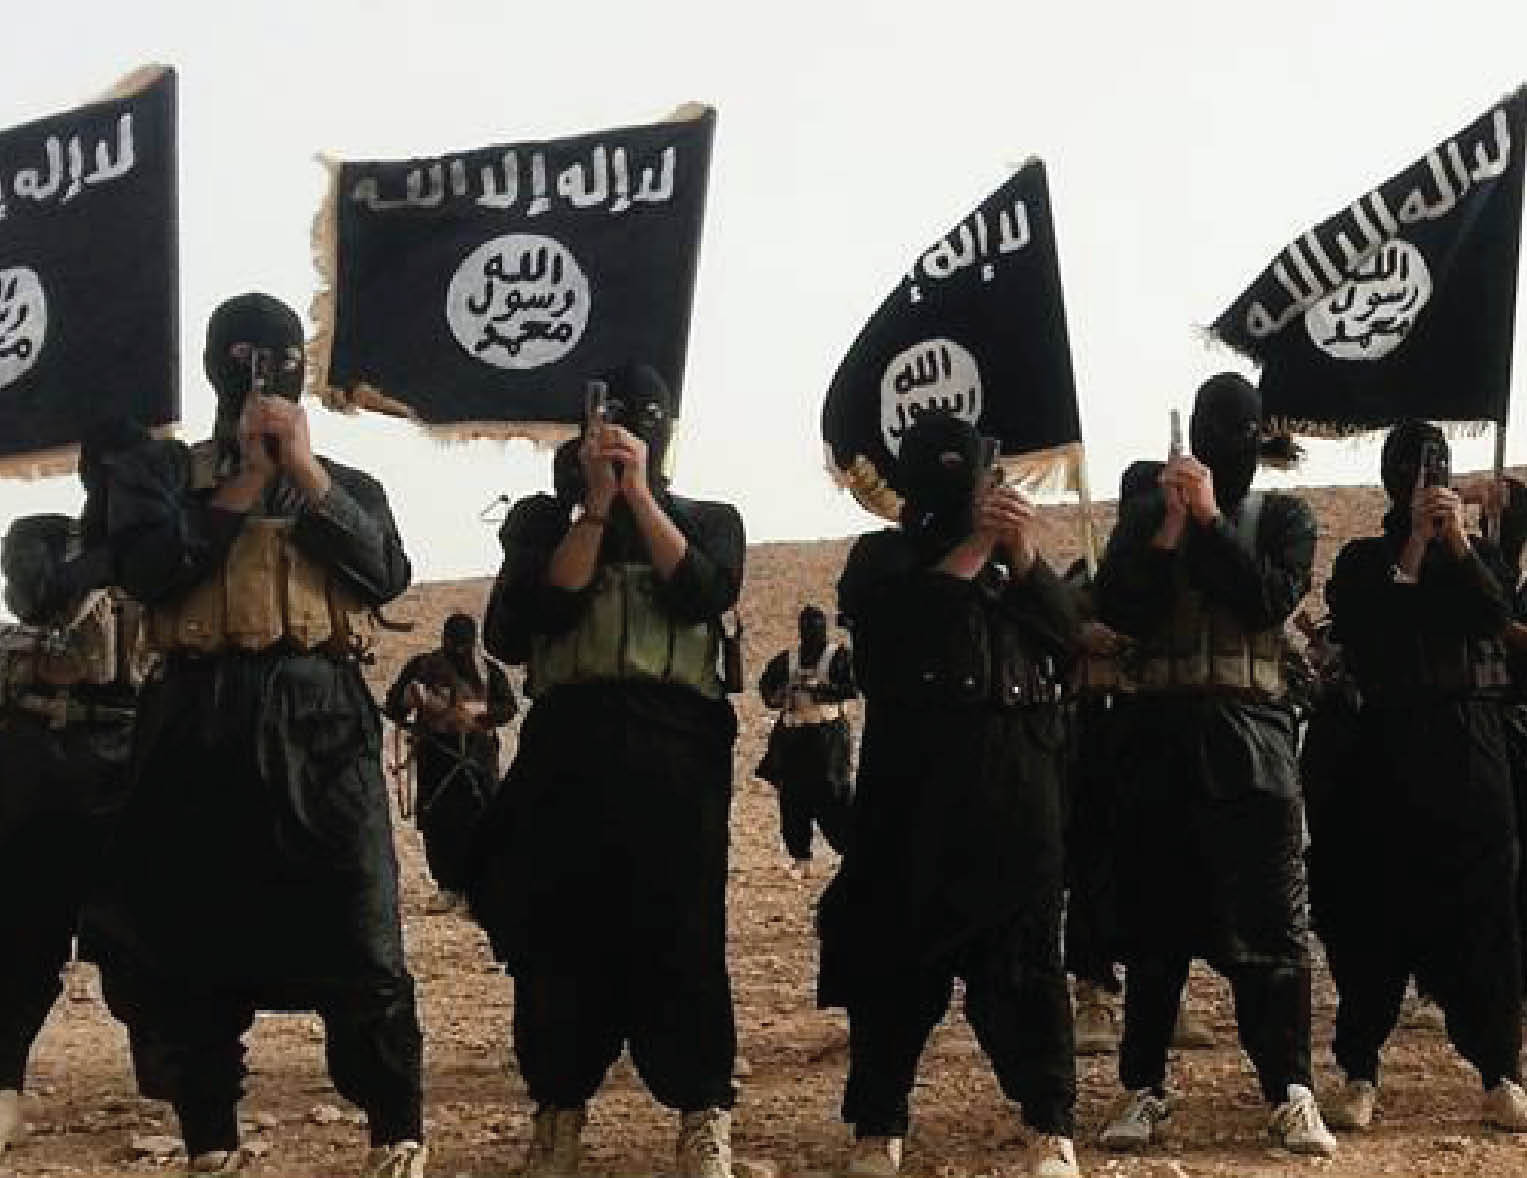 فيديو لـ"داعش" يظهر إعدام جنديين تركيين حرقا